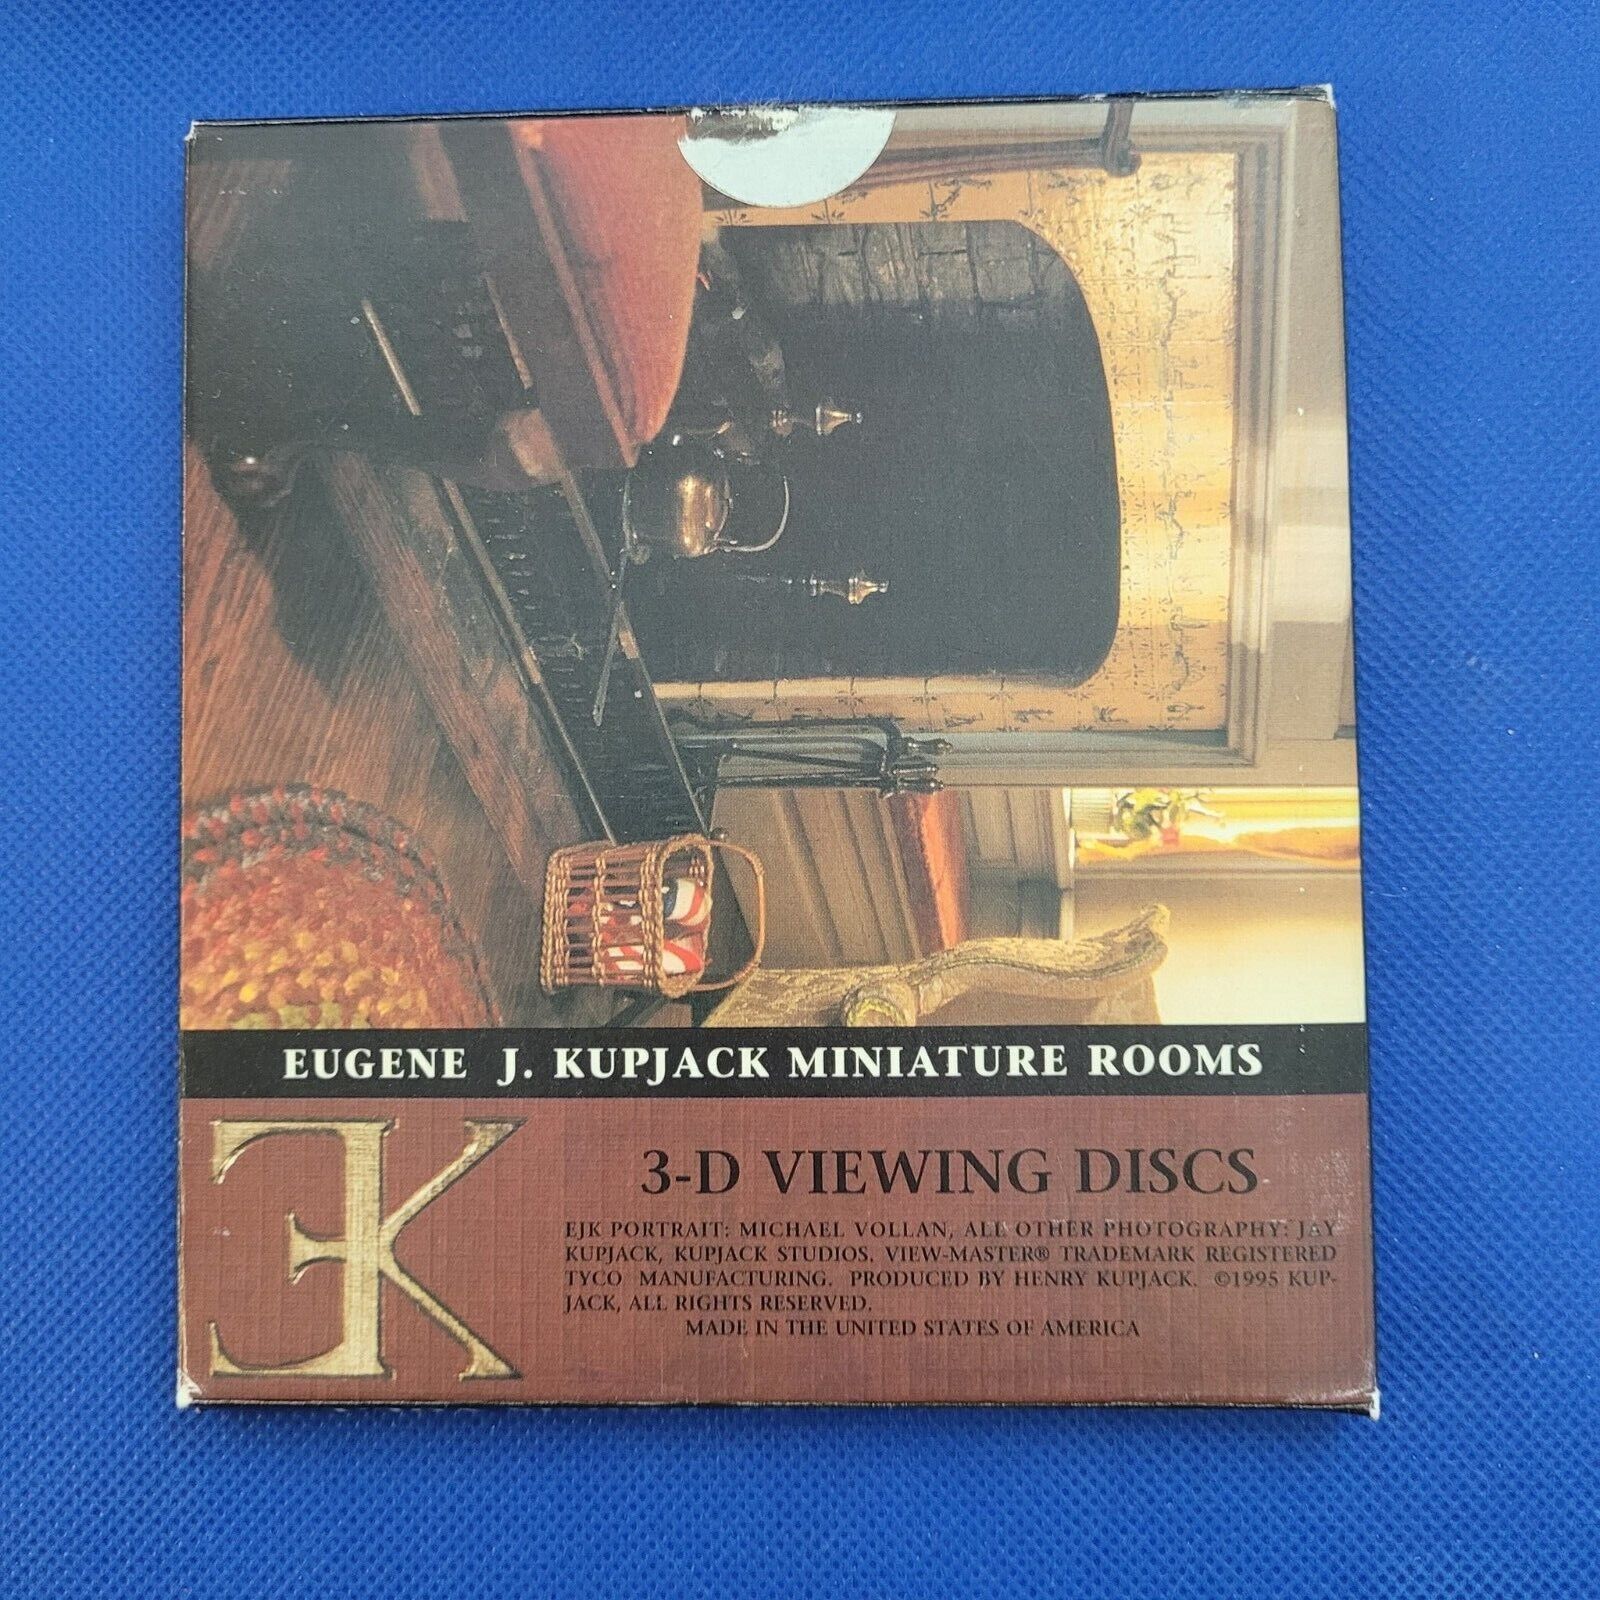 Eugene J. Kupjack Miniature Rooms Vol. 1 view-master 4 Reels Folder